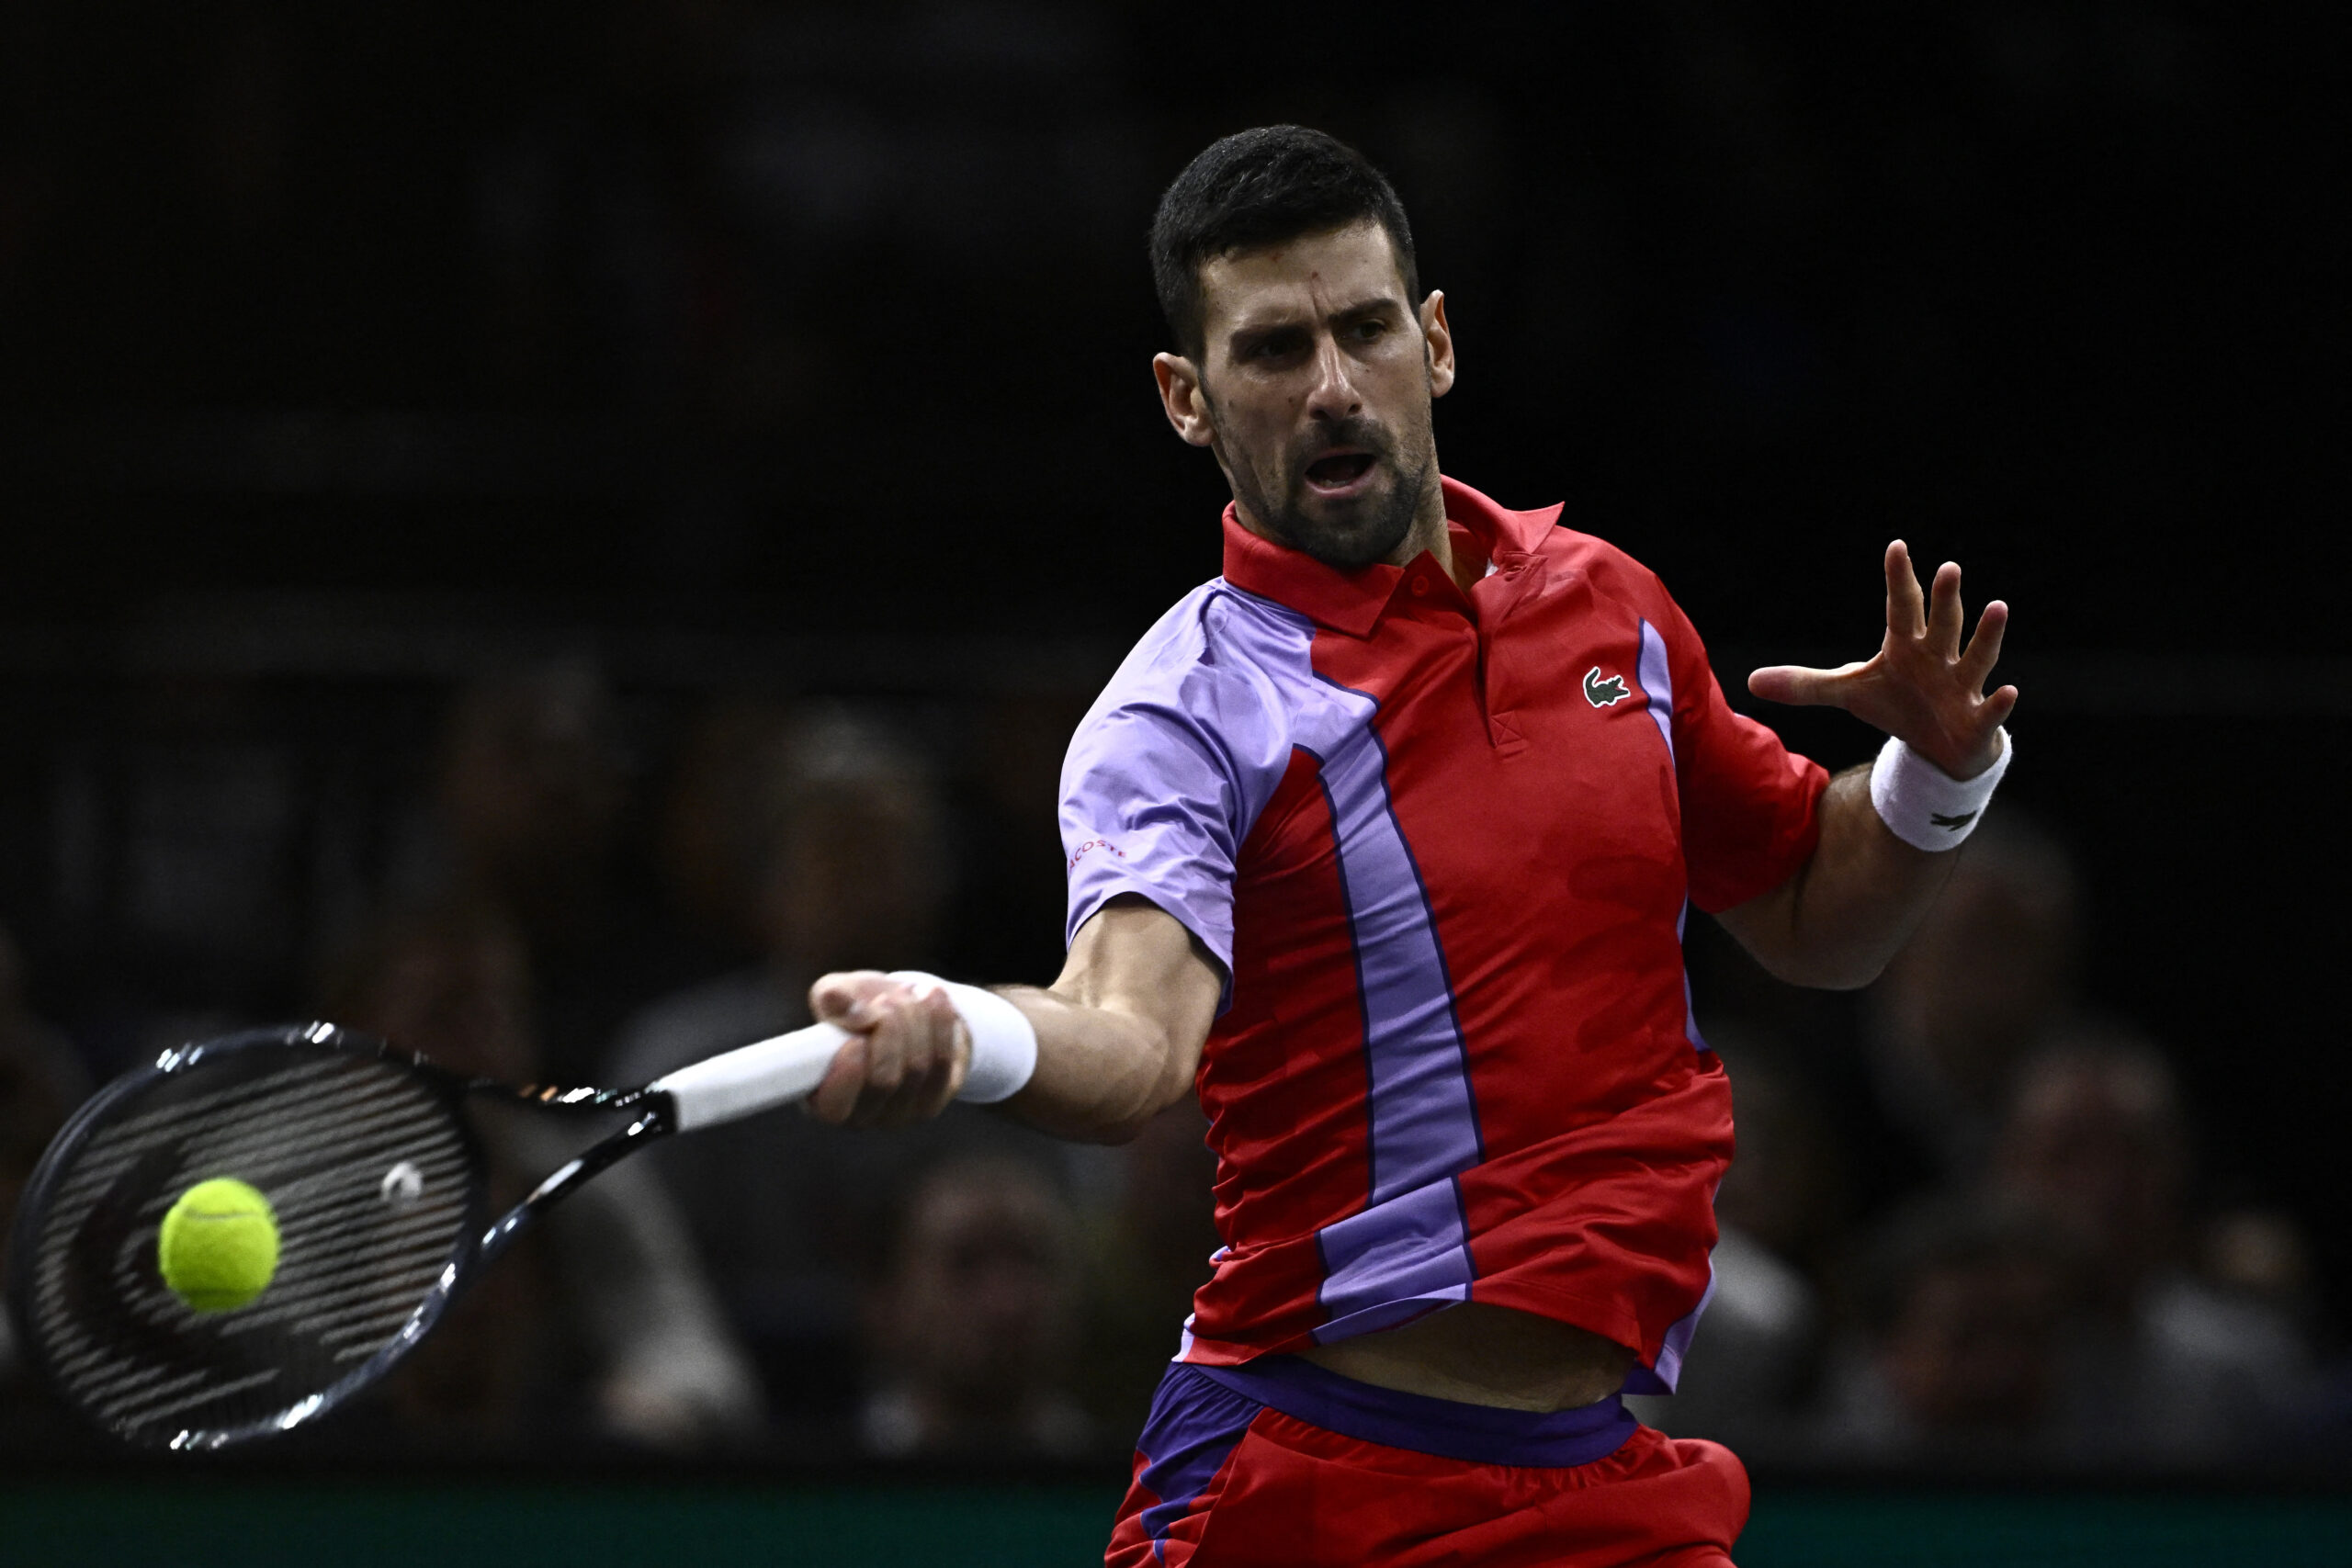 Ailing Djokovic ‘ran out of steam’ in Paris triumph | The Express Tribune